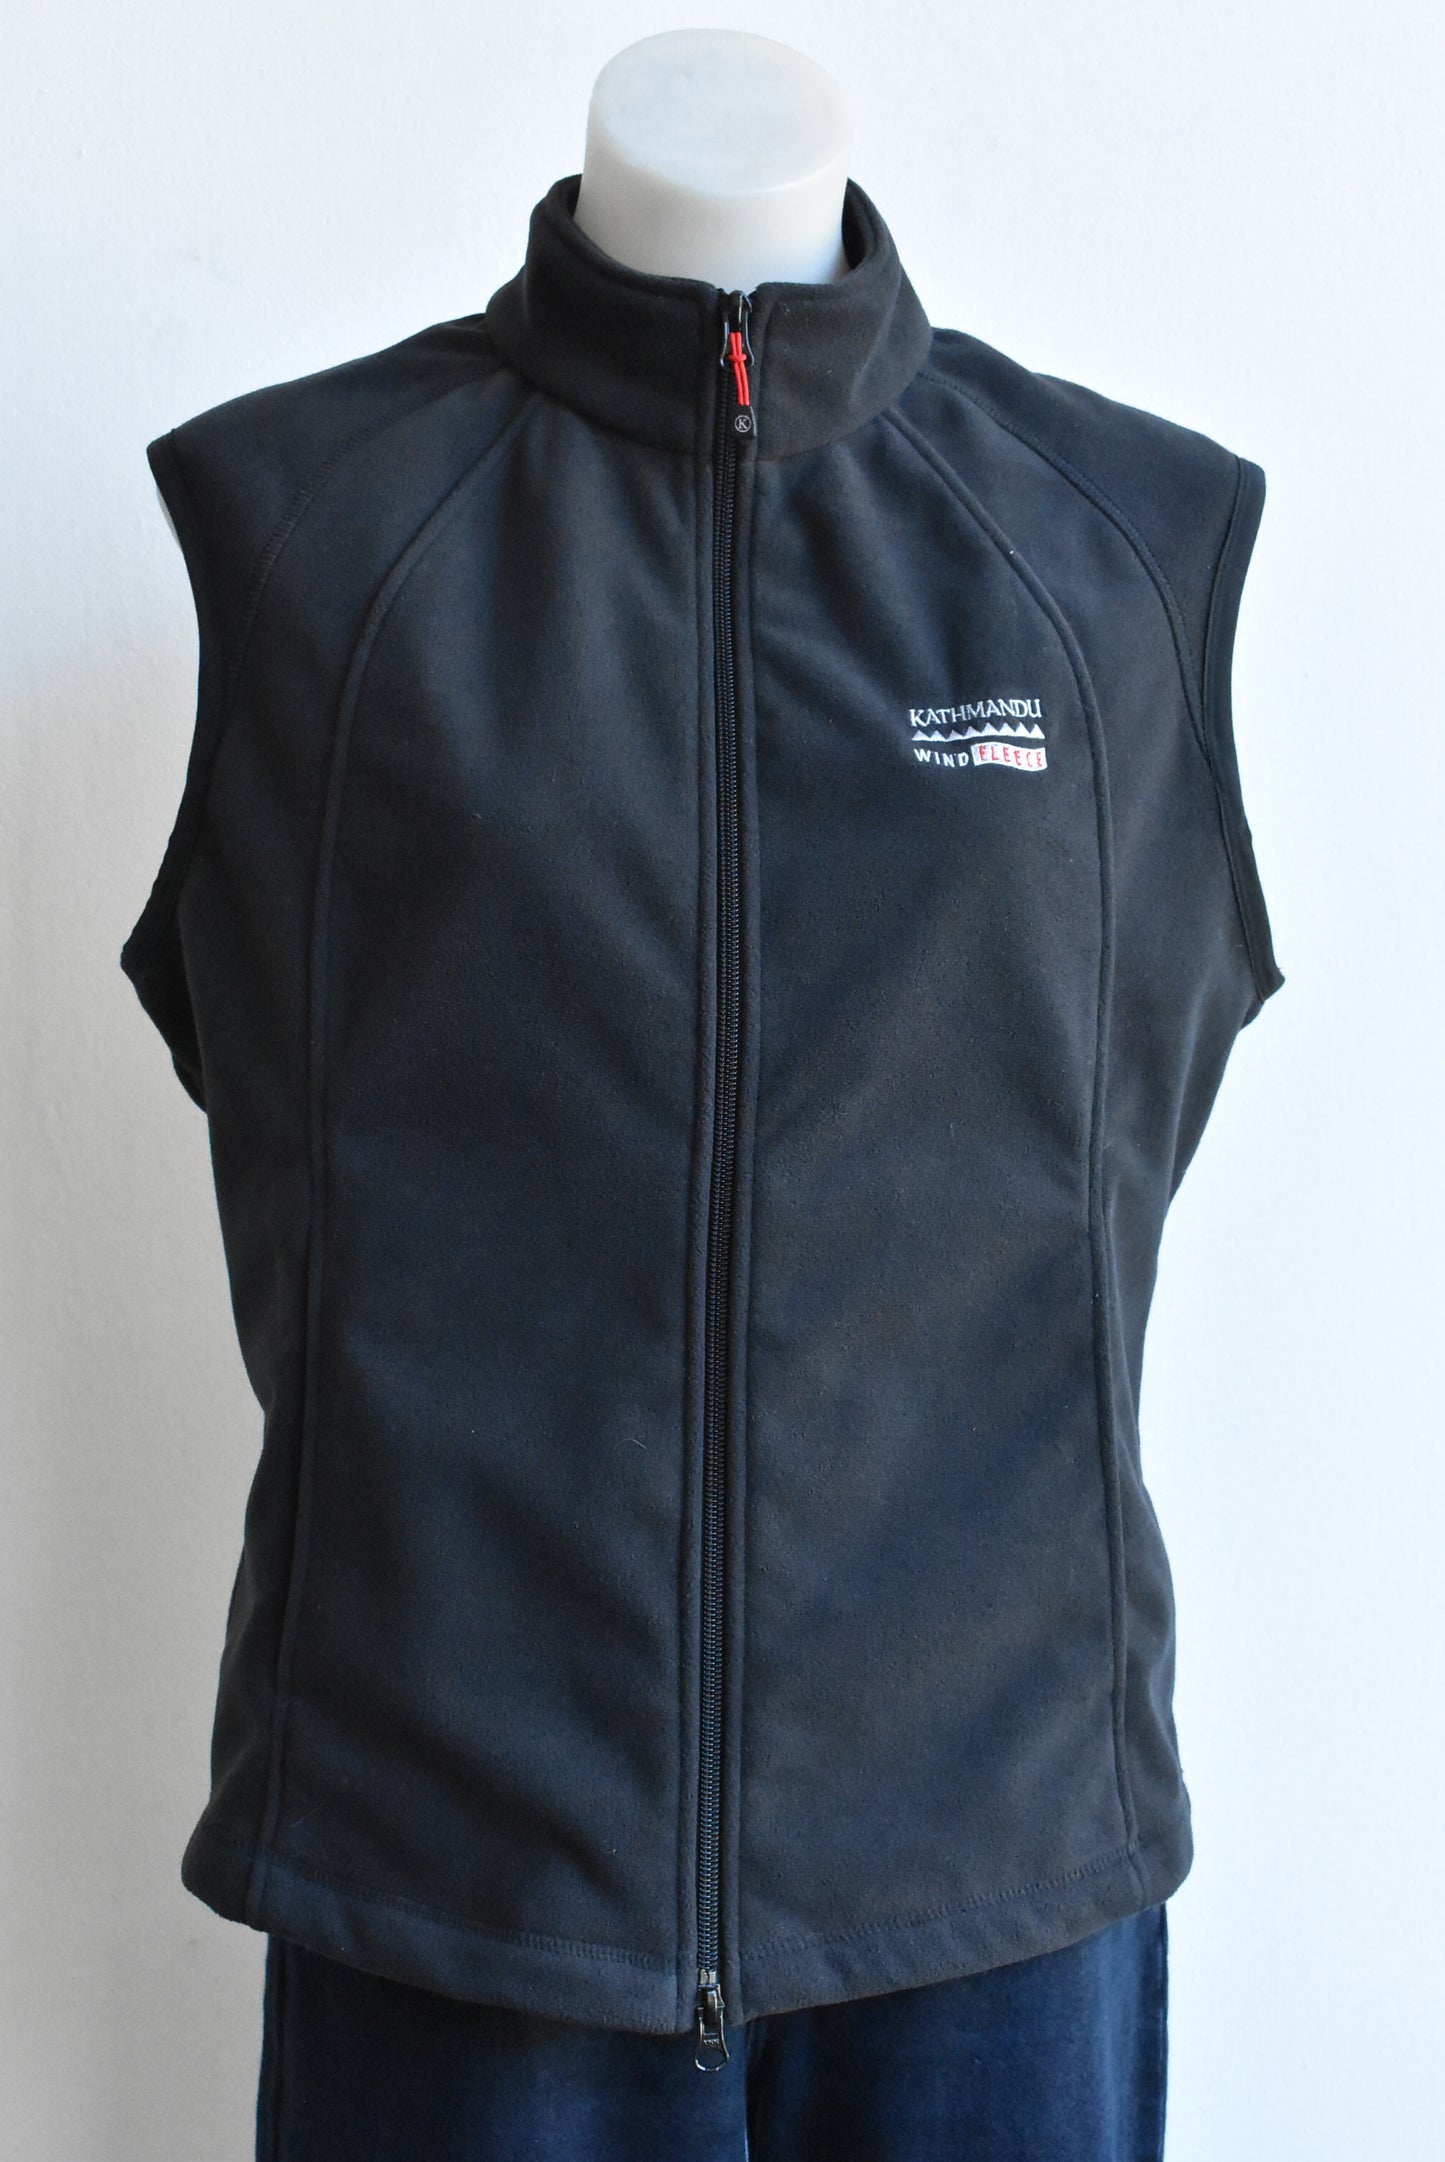 Kathmandu wind fleece black vest, size 14